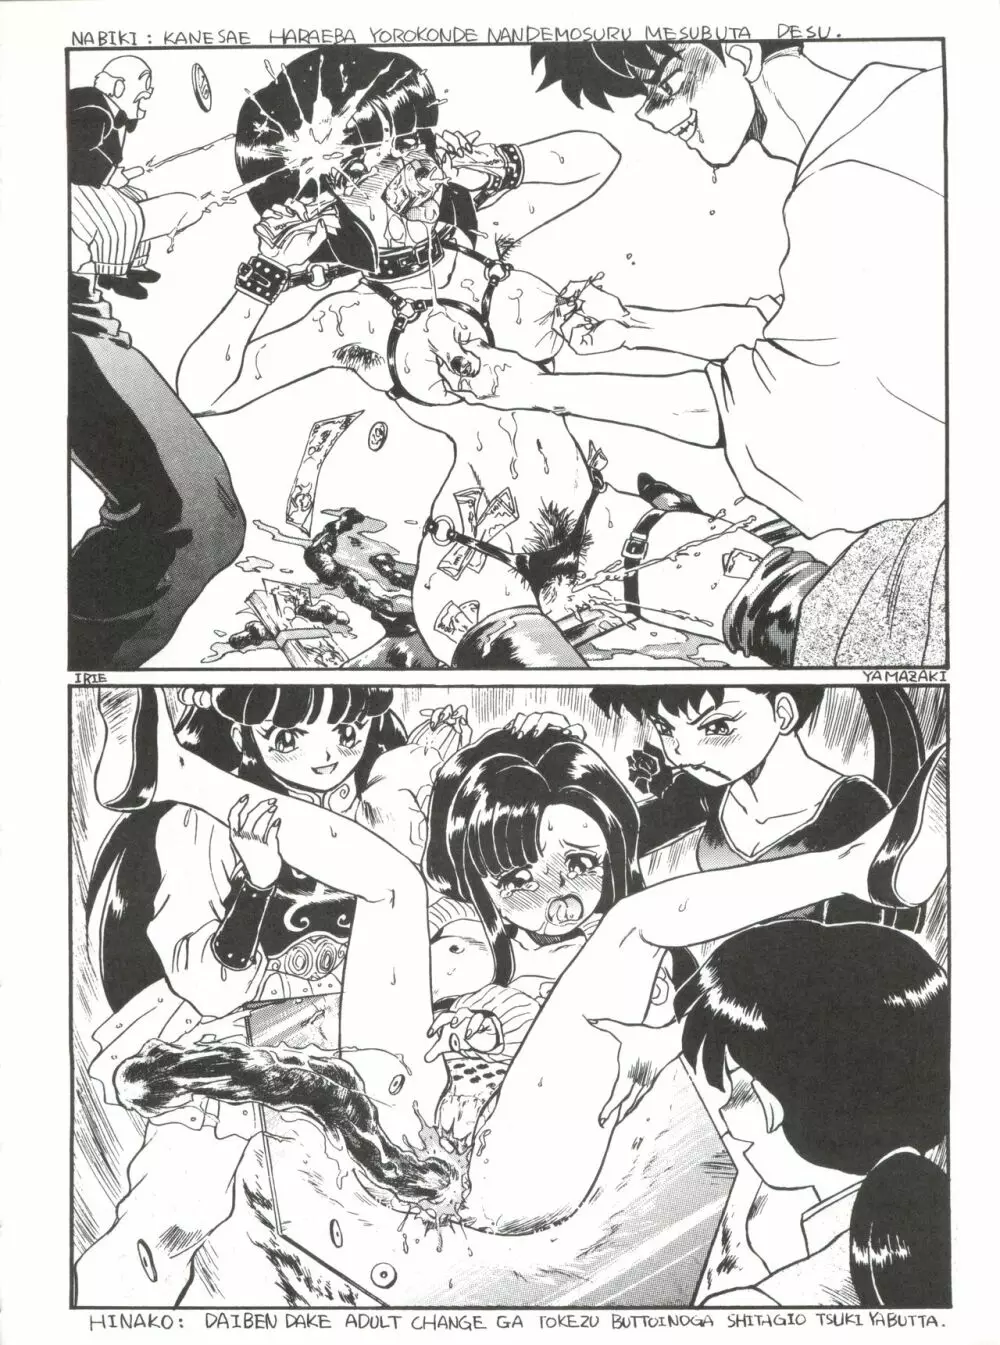 JoRiJoRi No.6 - page21